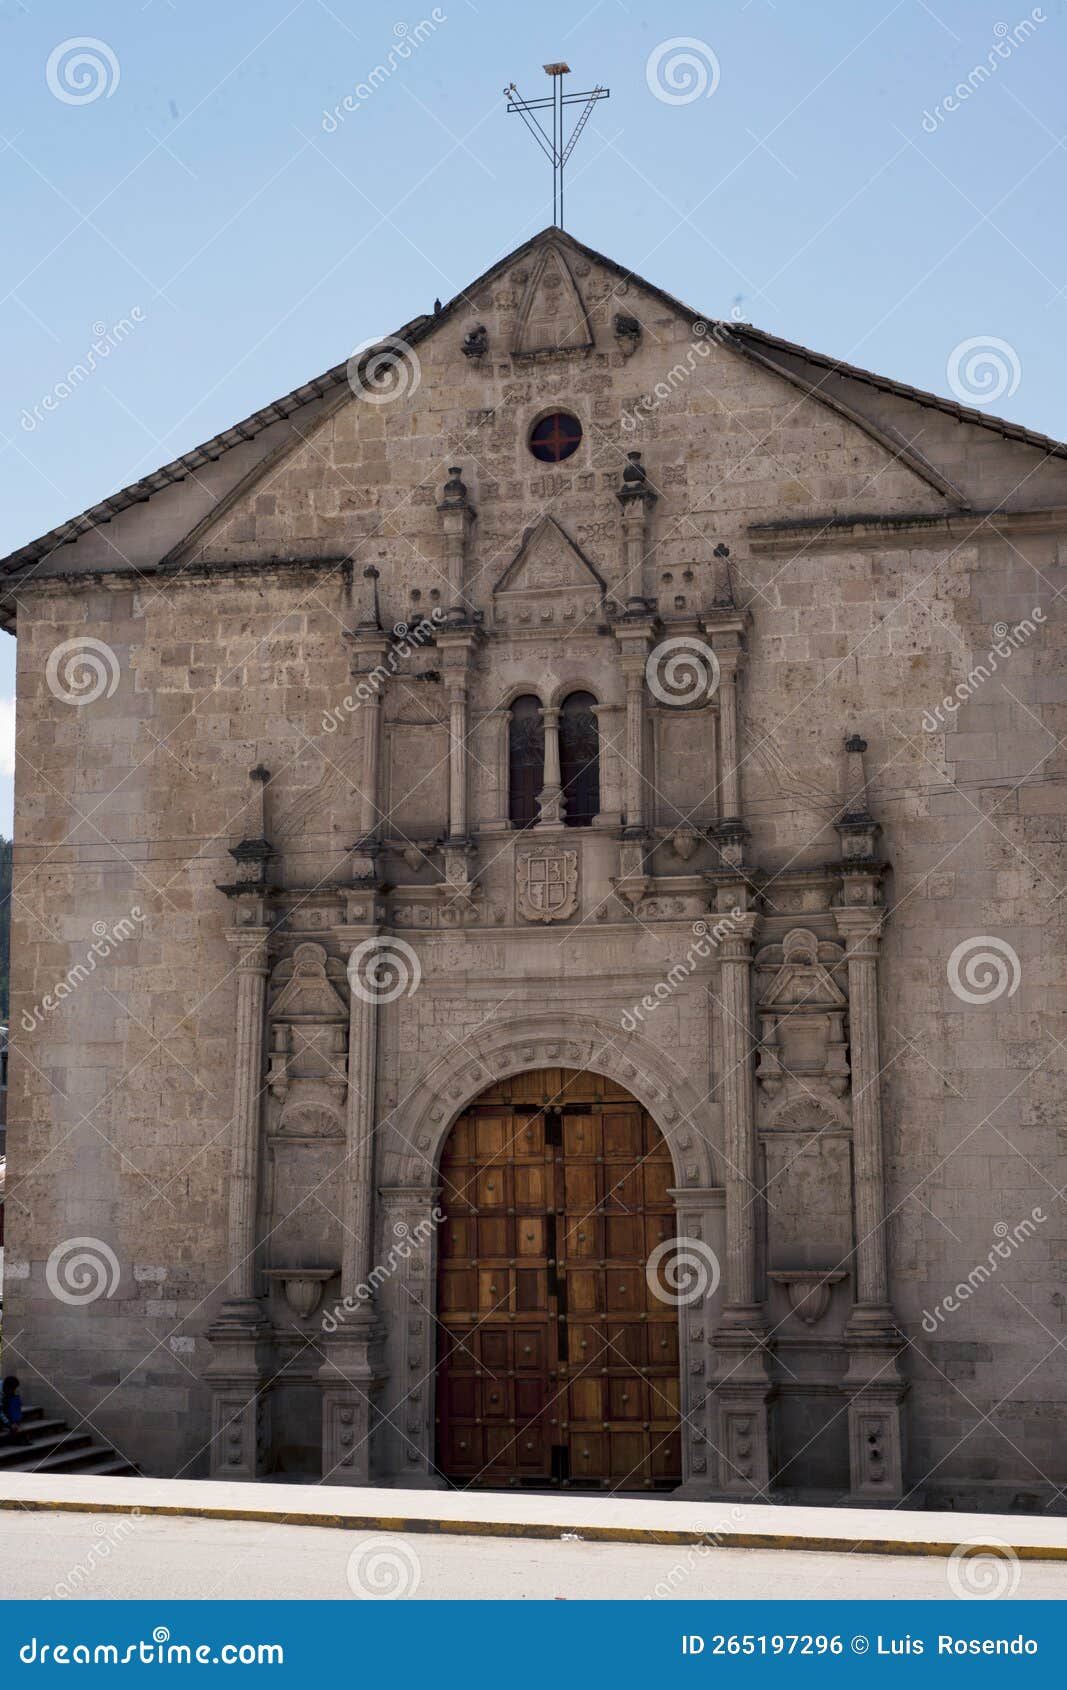 andahuaylas peru plaza de armas historical cathedral june 2019 arquitecture barroque